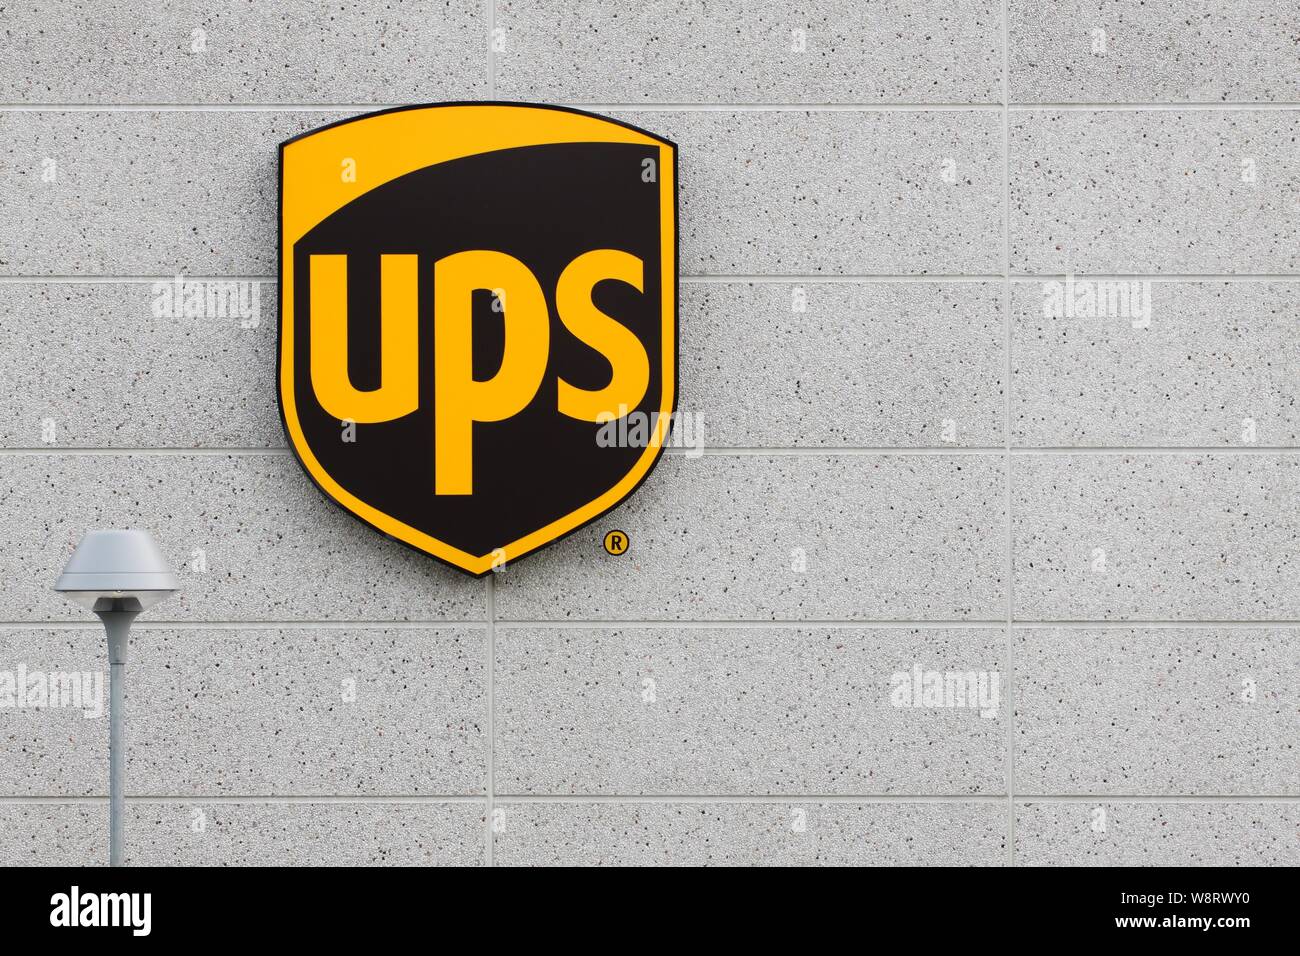 Vejle, Denmark - July 4, 2015: UPS (United Parcel Service) logo on a facade. United Parcel Service is the world's largest package delivery company Stock Photo